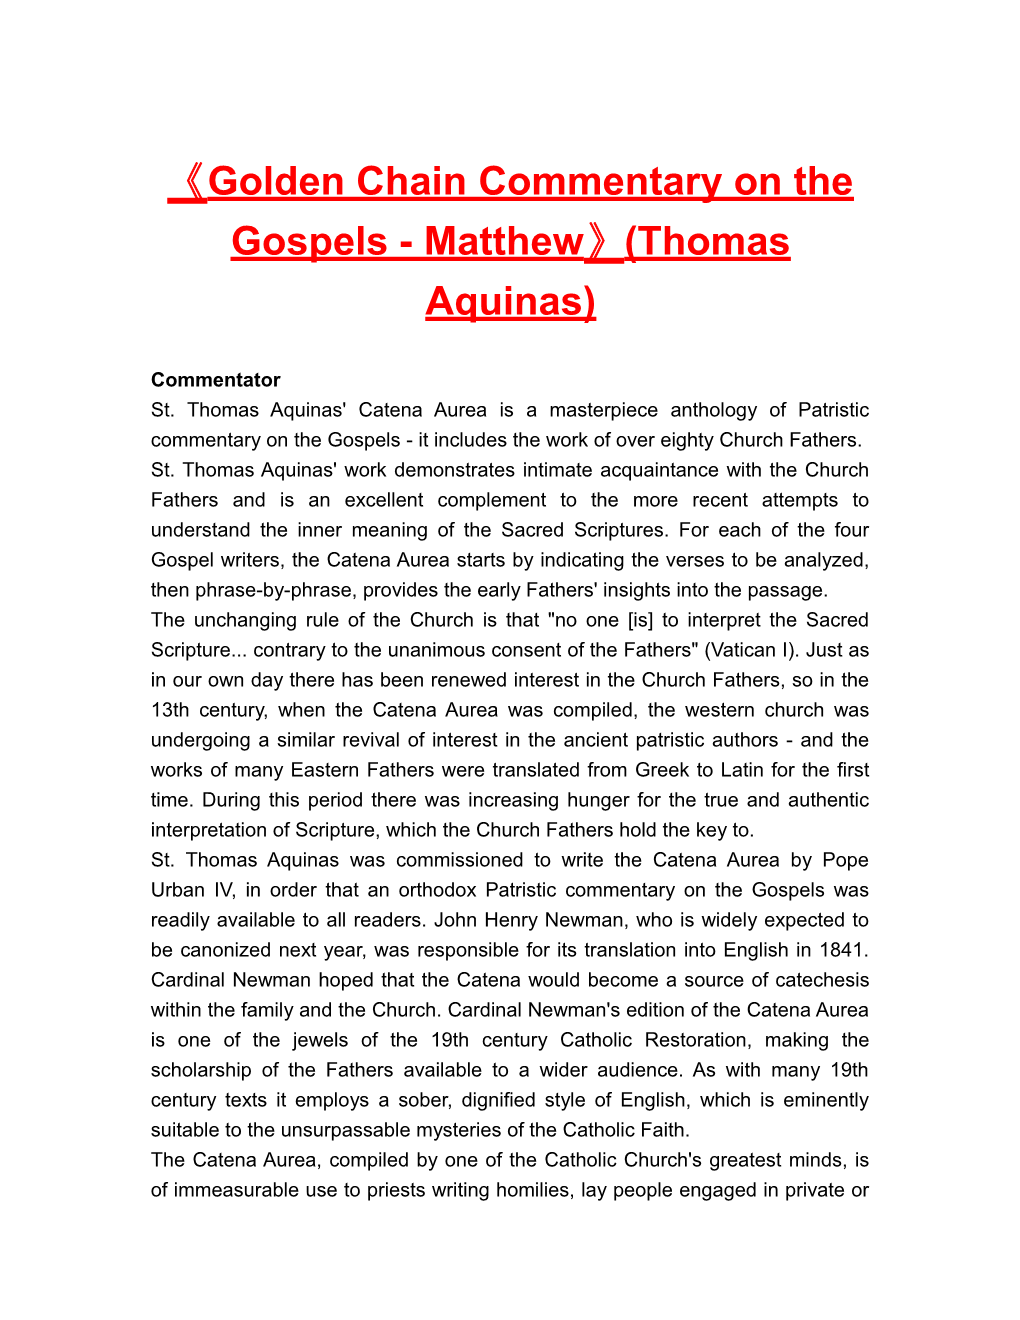 Golden Chain Commentary on the Gospels - Matthew (Thomas Aquinas)